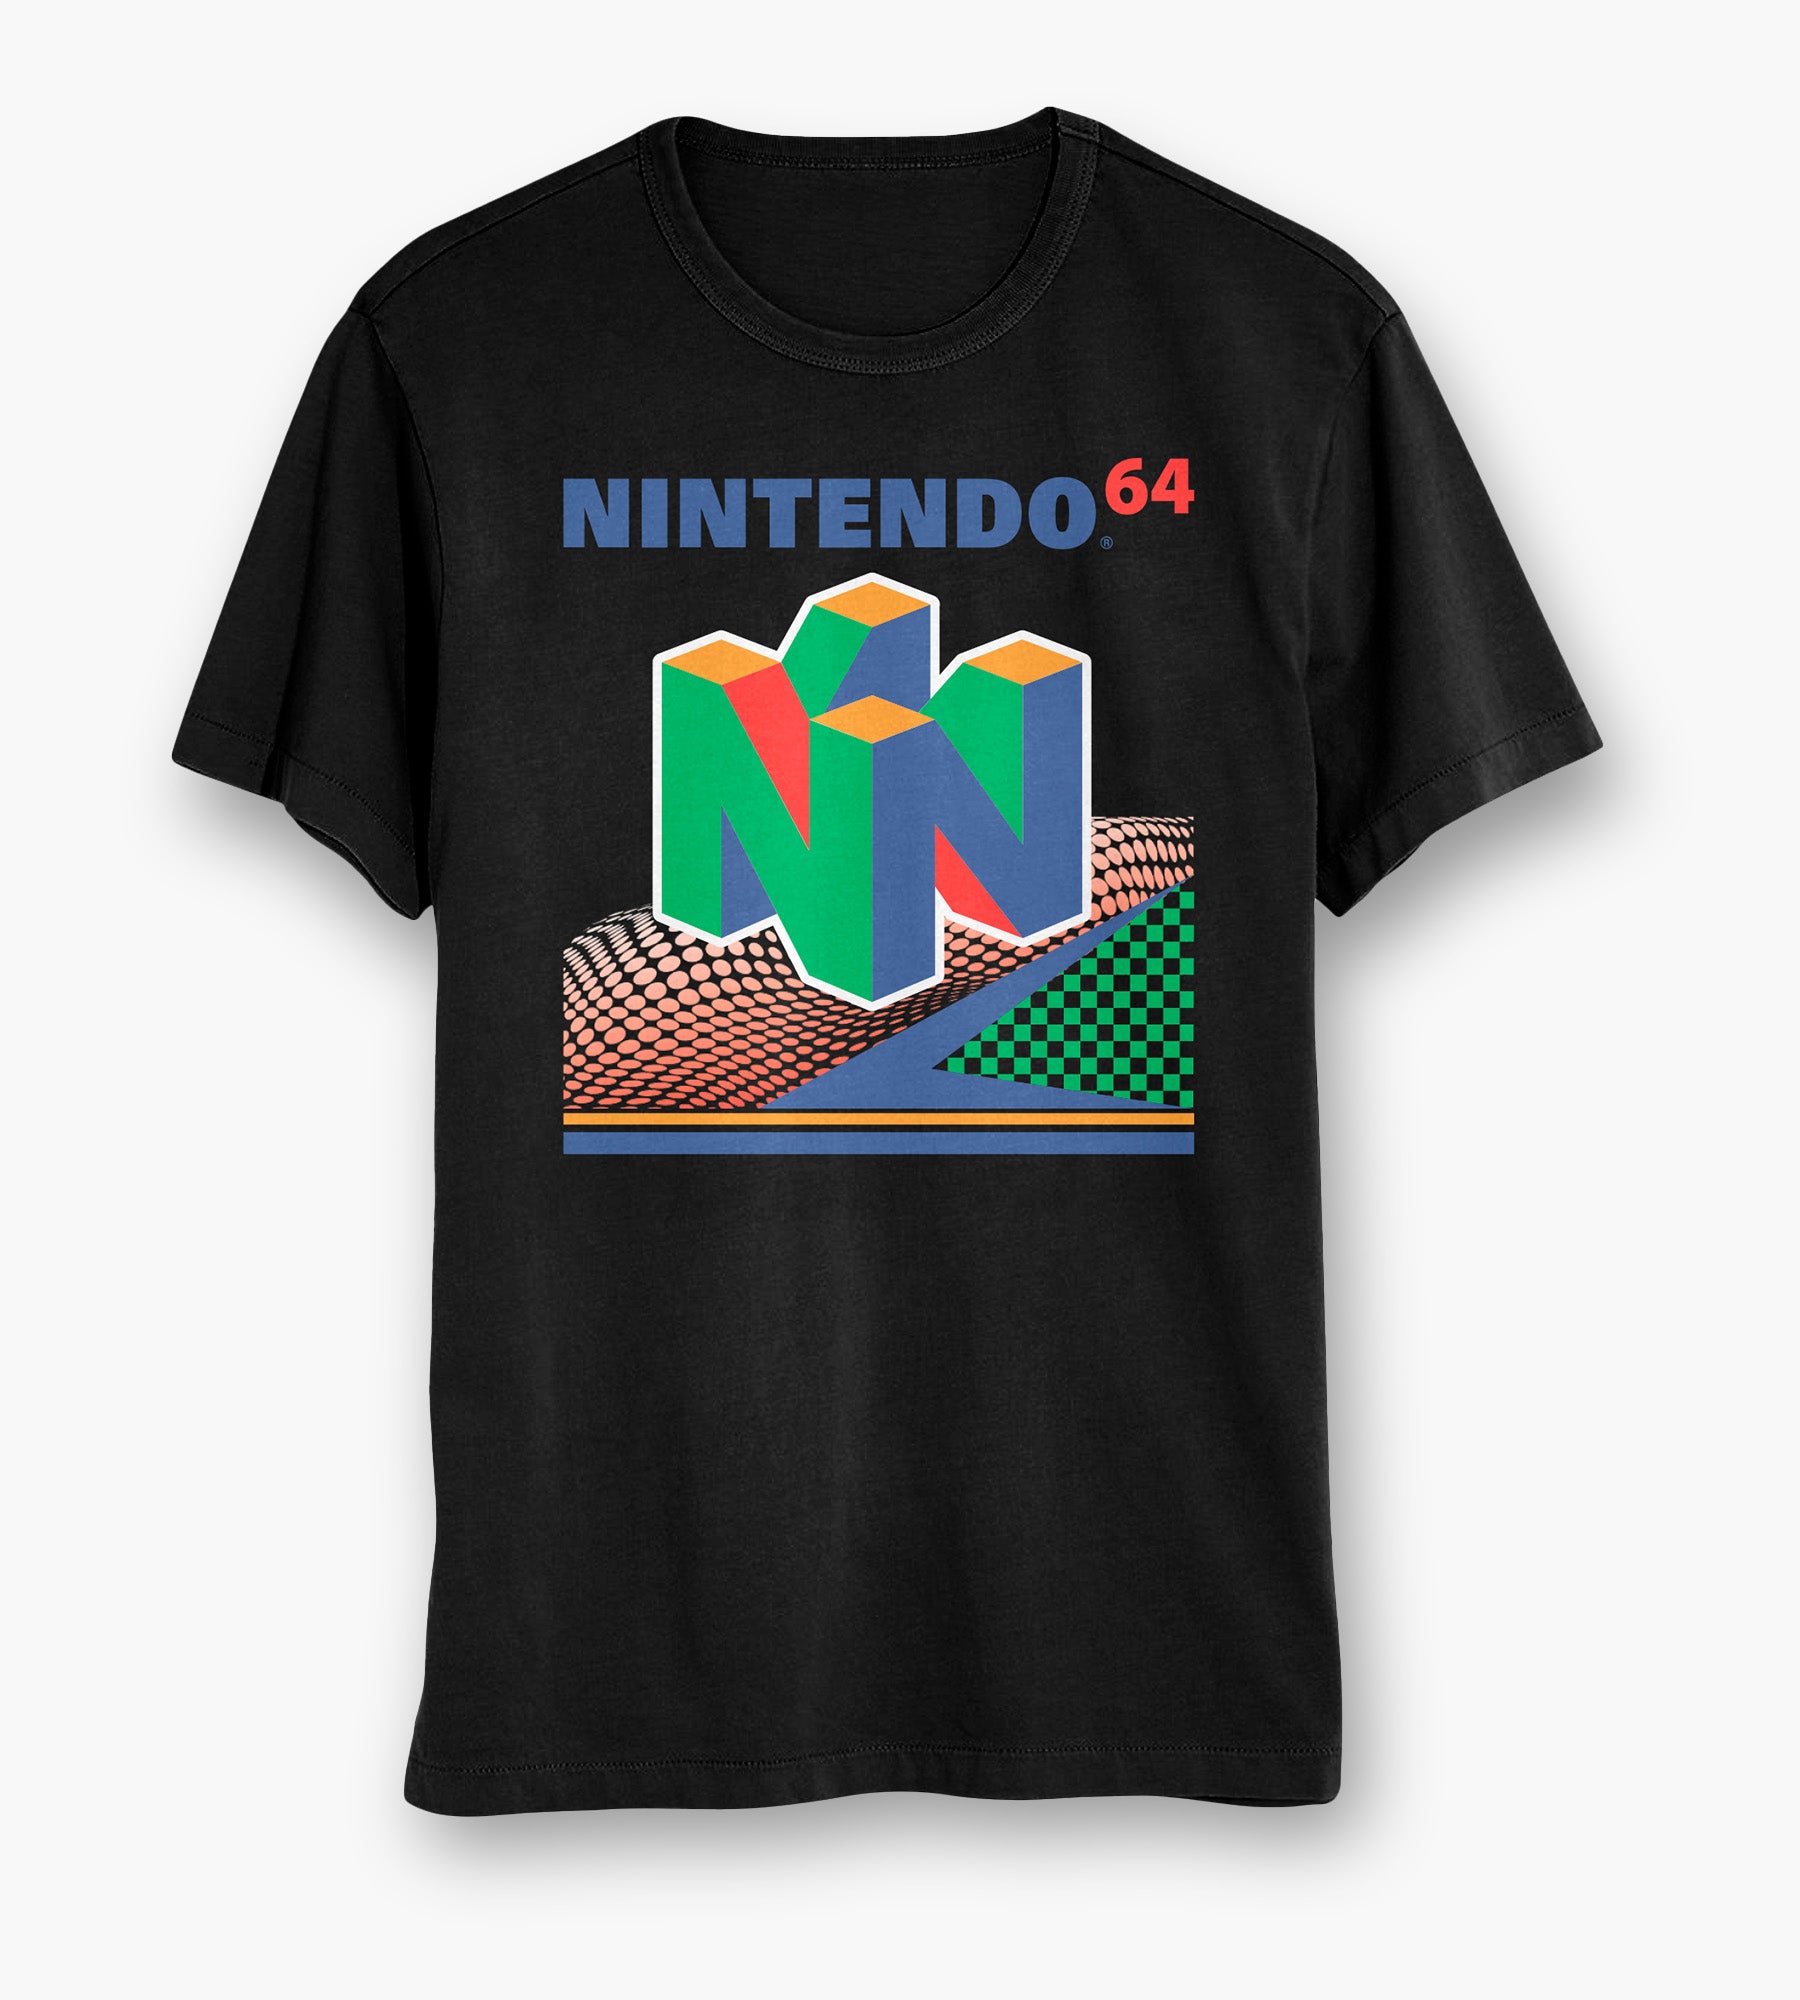 Nintendo '64 Graphic Tee